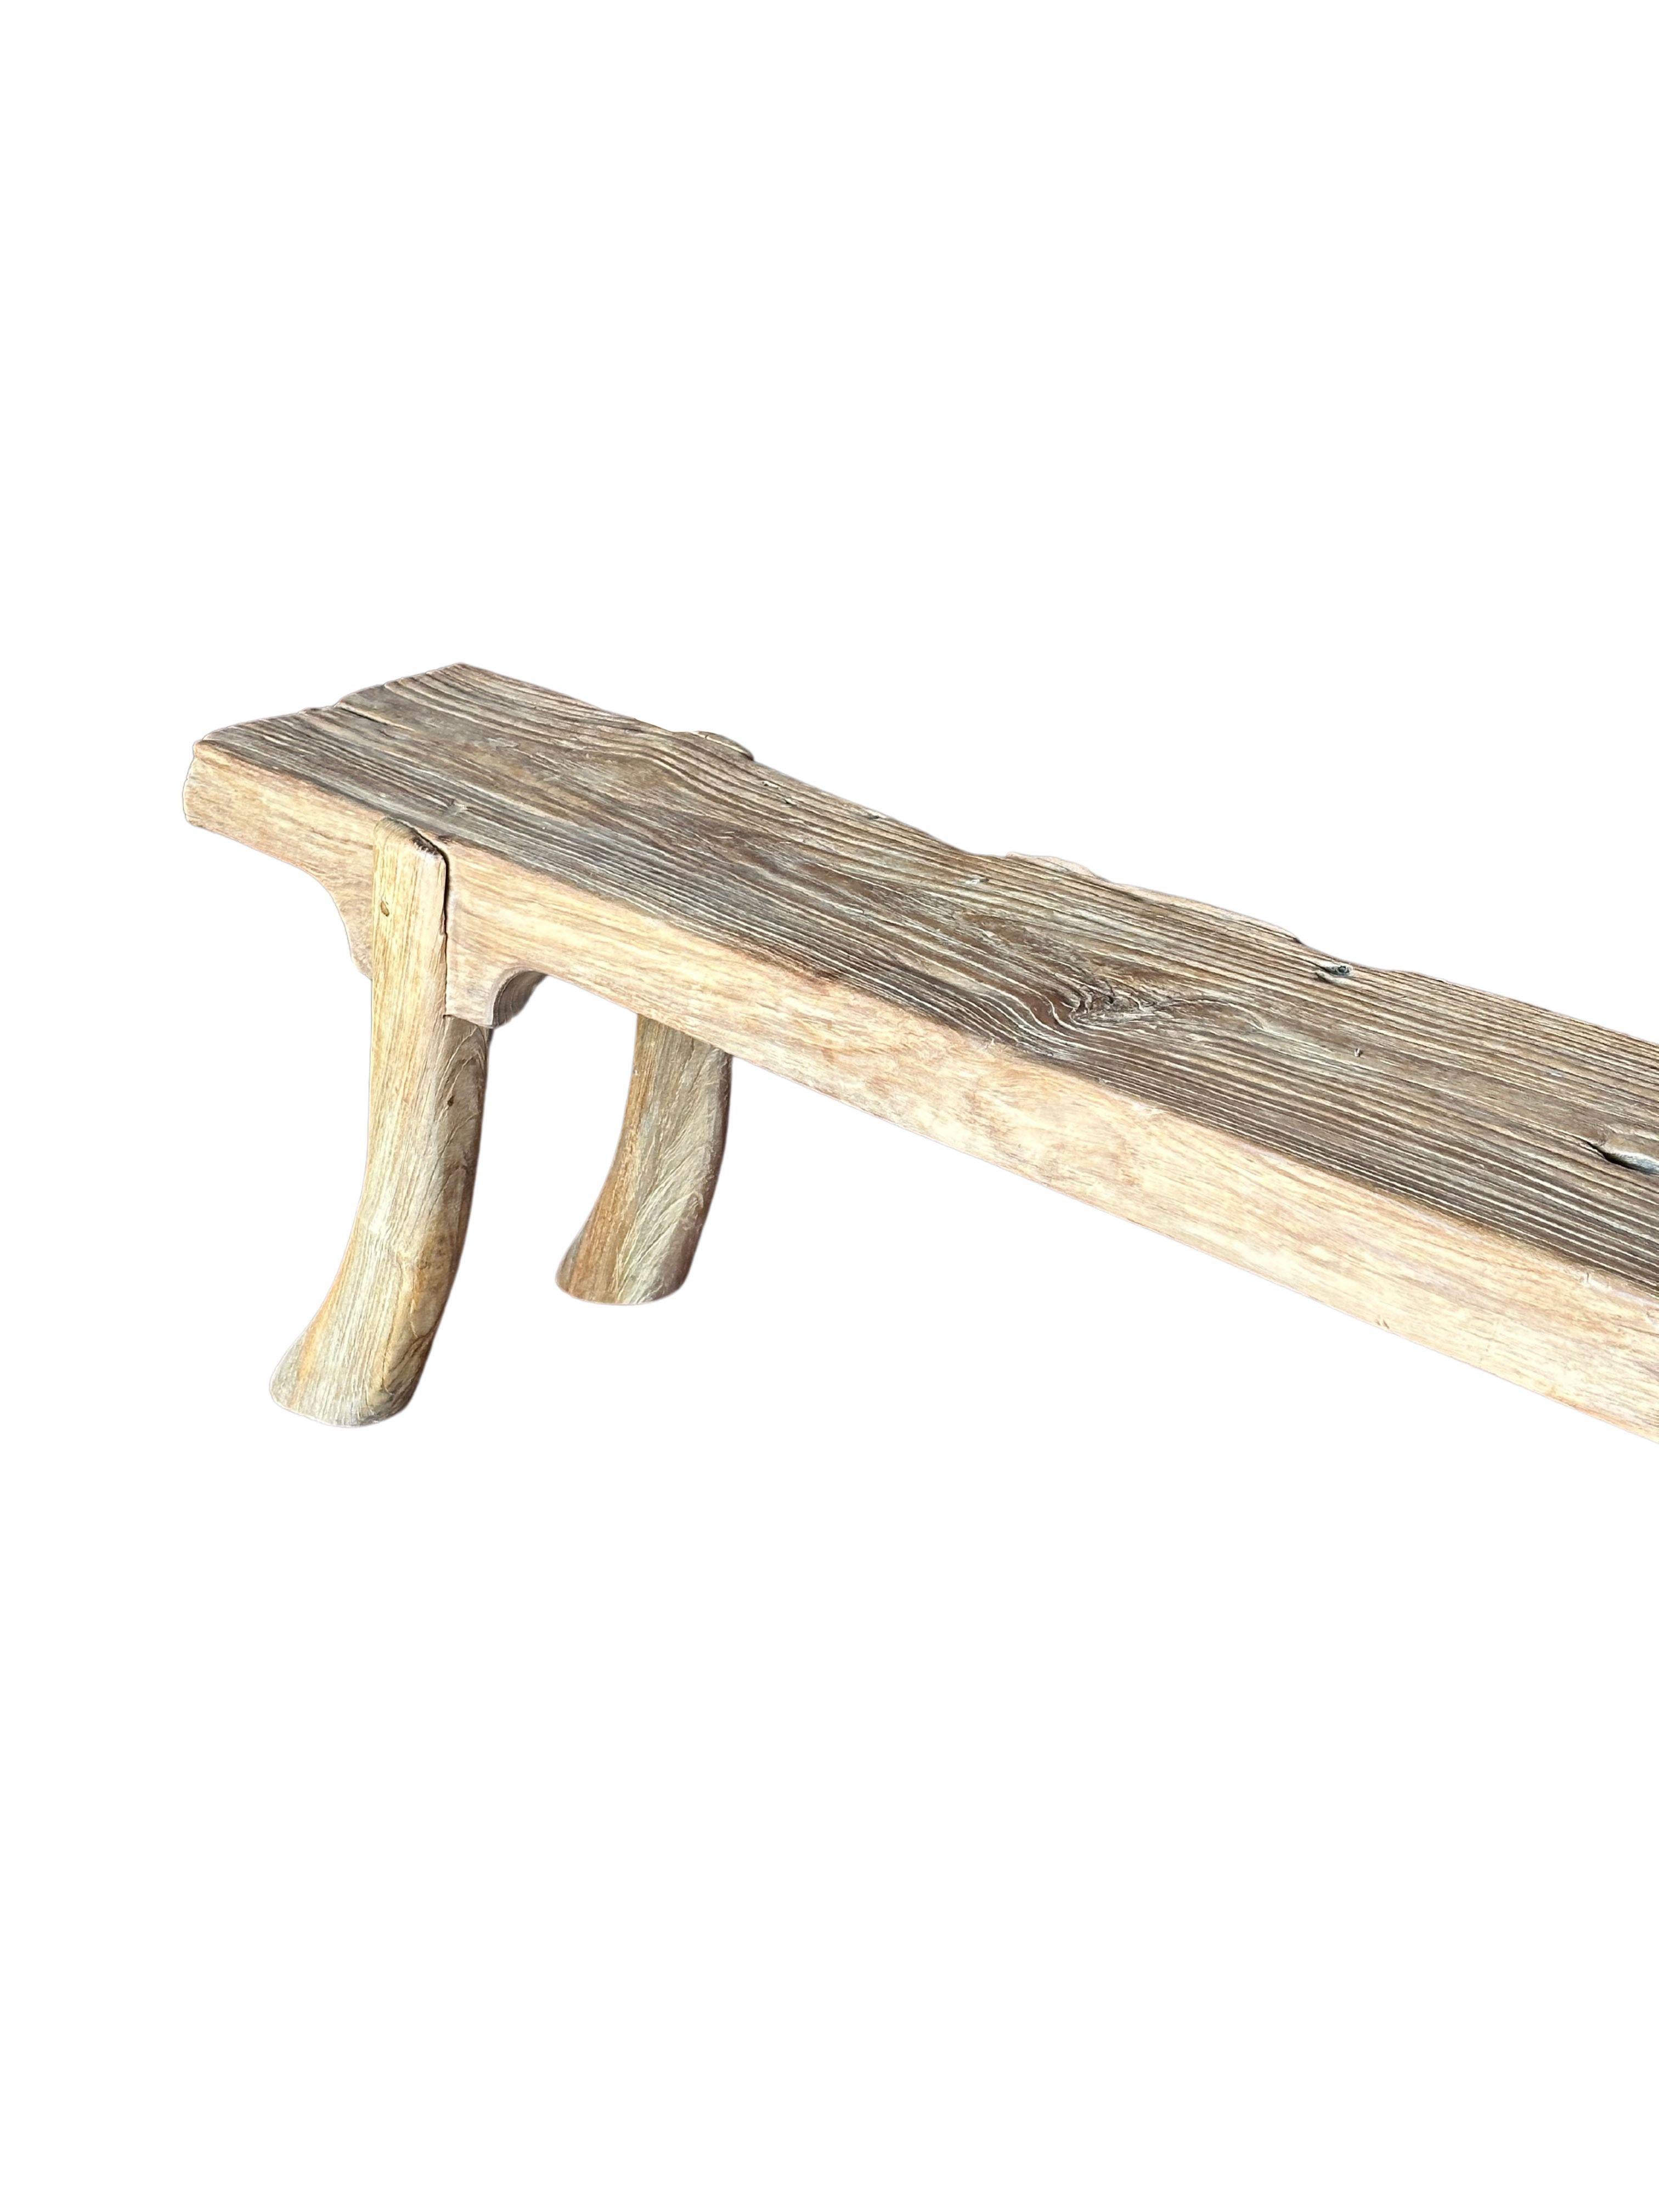 Other Teak Wood Sculptural Bench Modern Organic For Sale